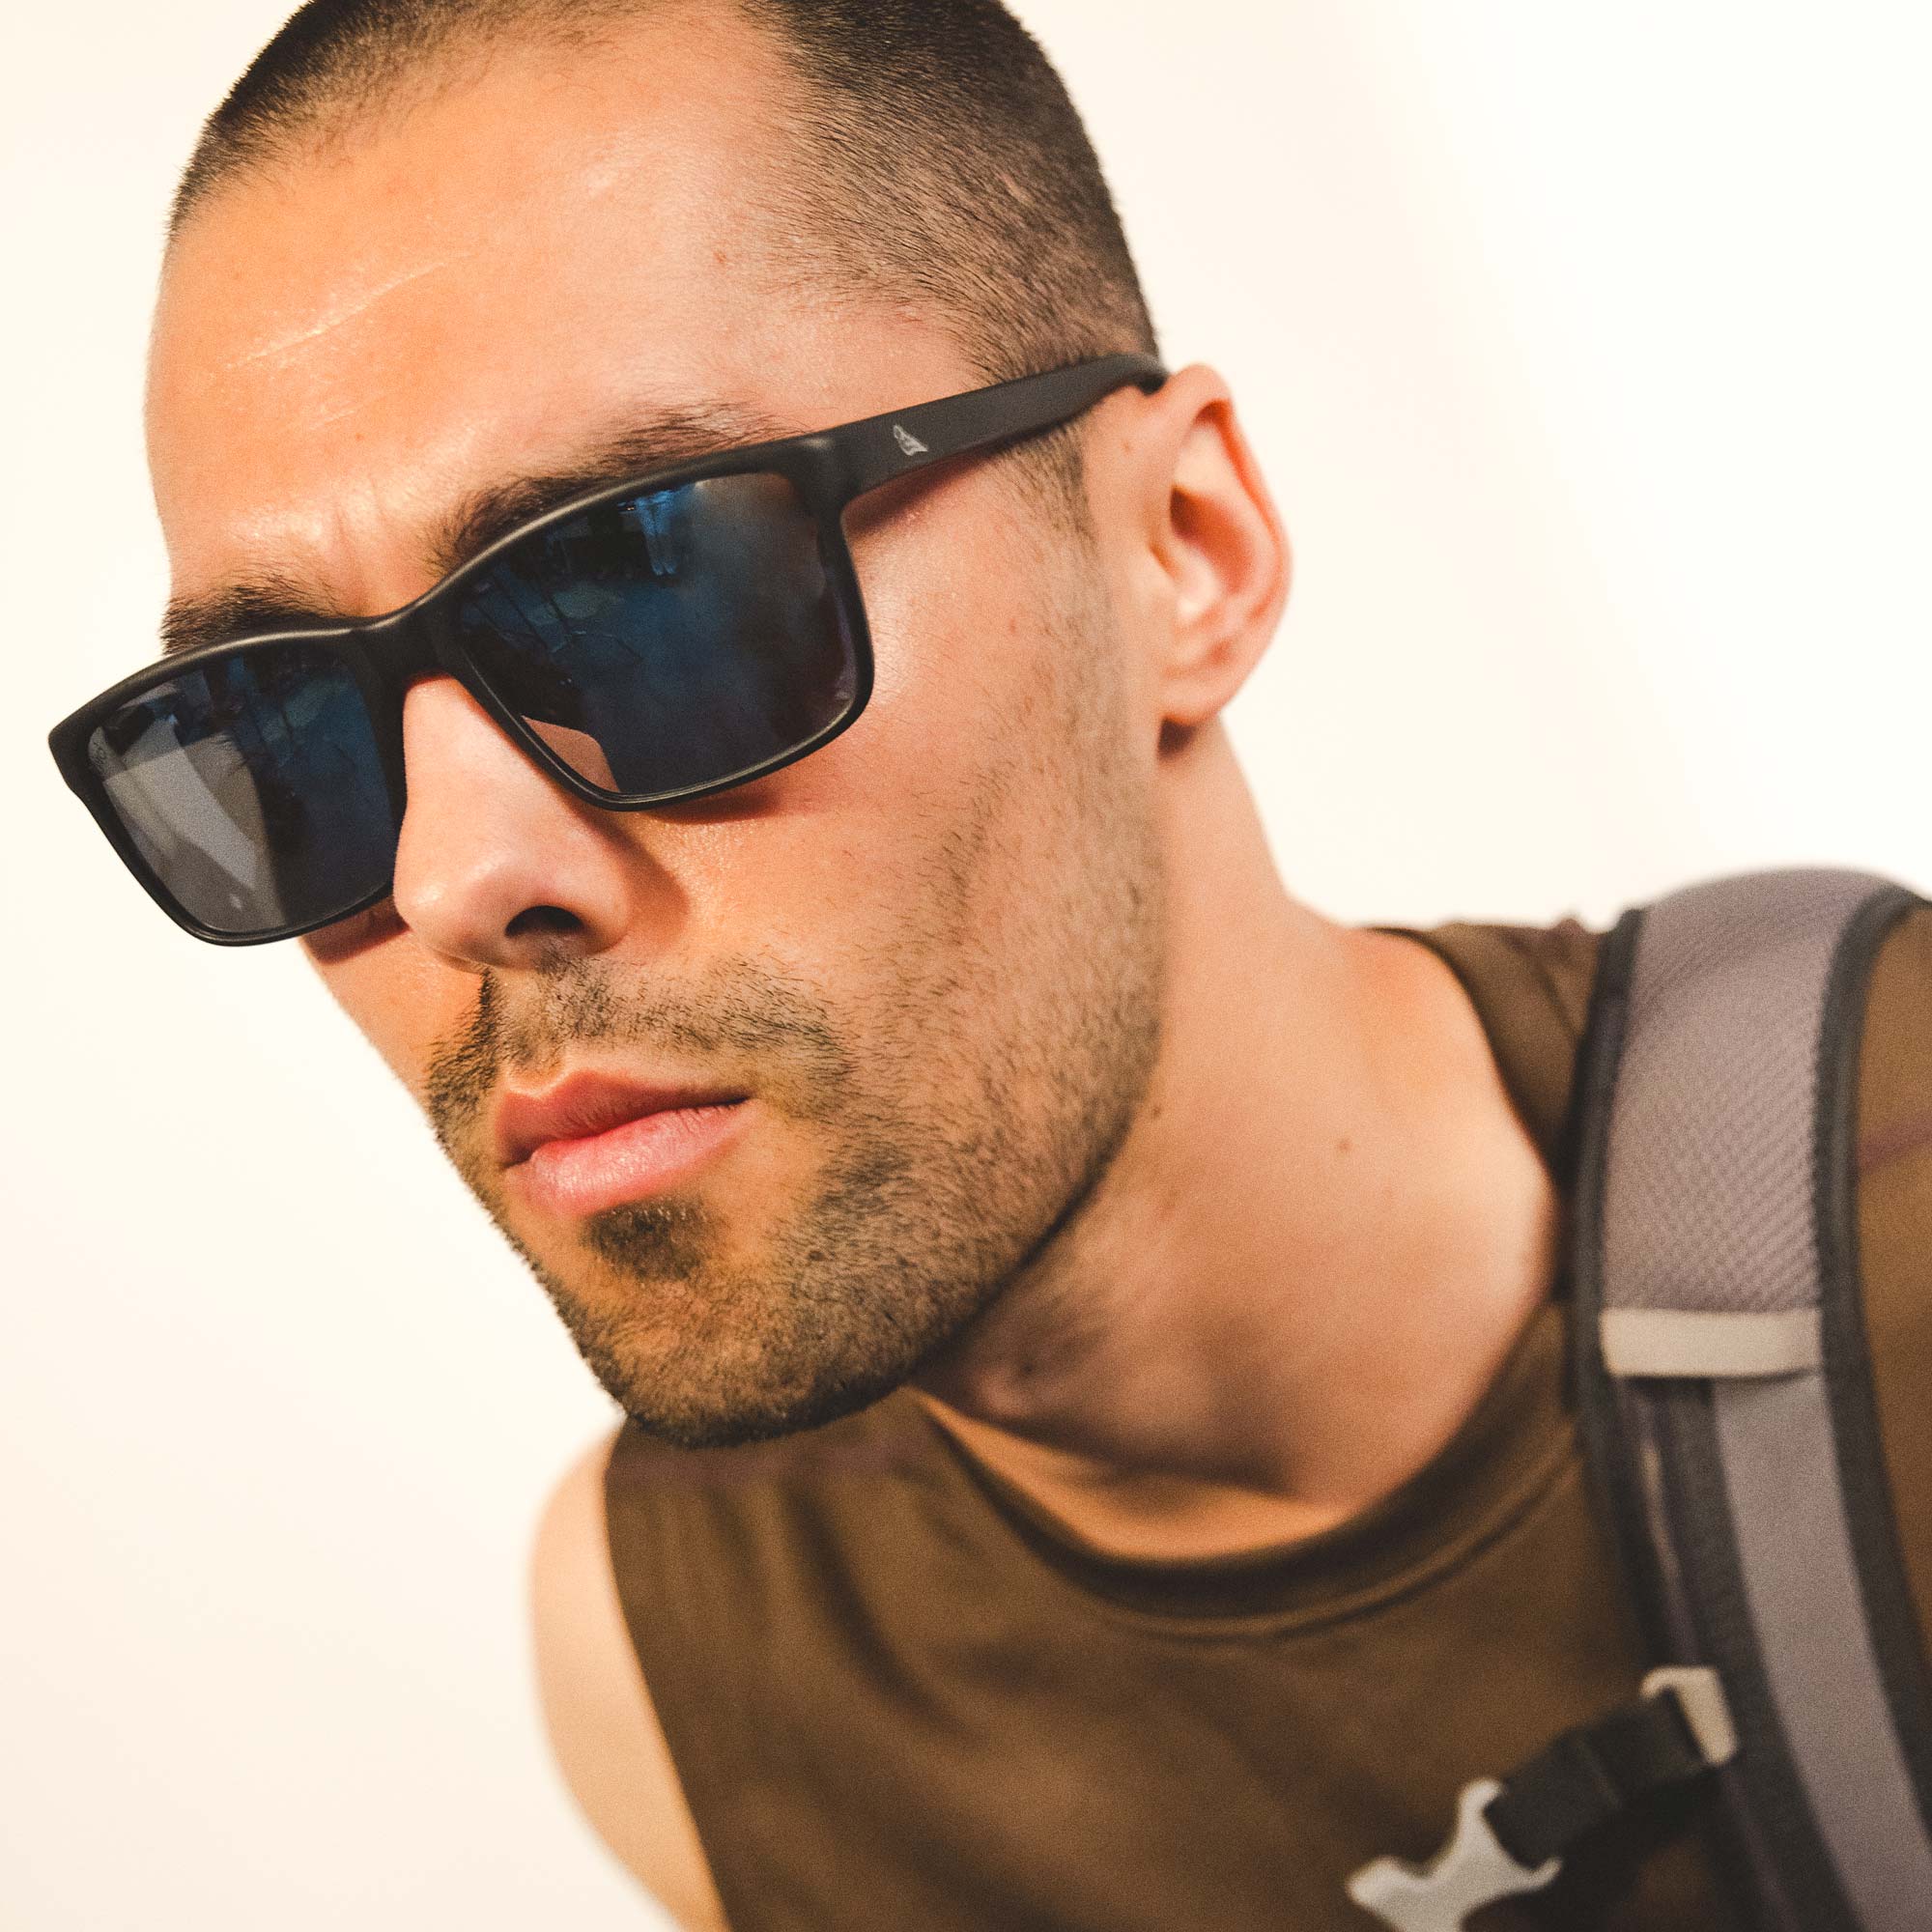 Rufa_Mens-Running-sunglasses-in-black-with-chrome-polarised-lenses-2.jpg